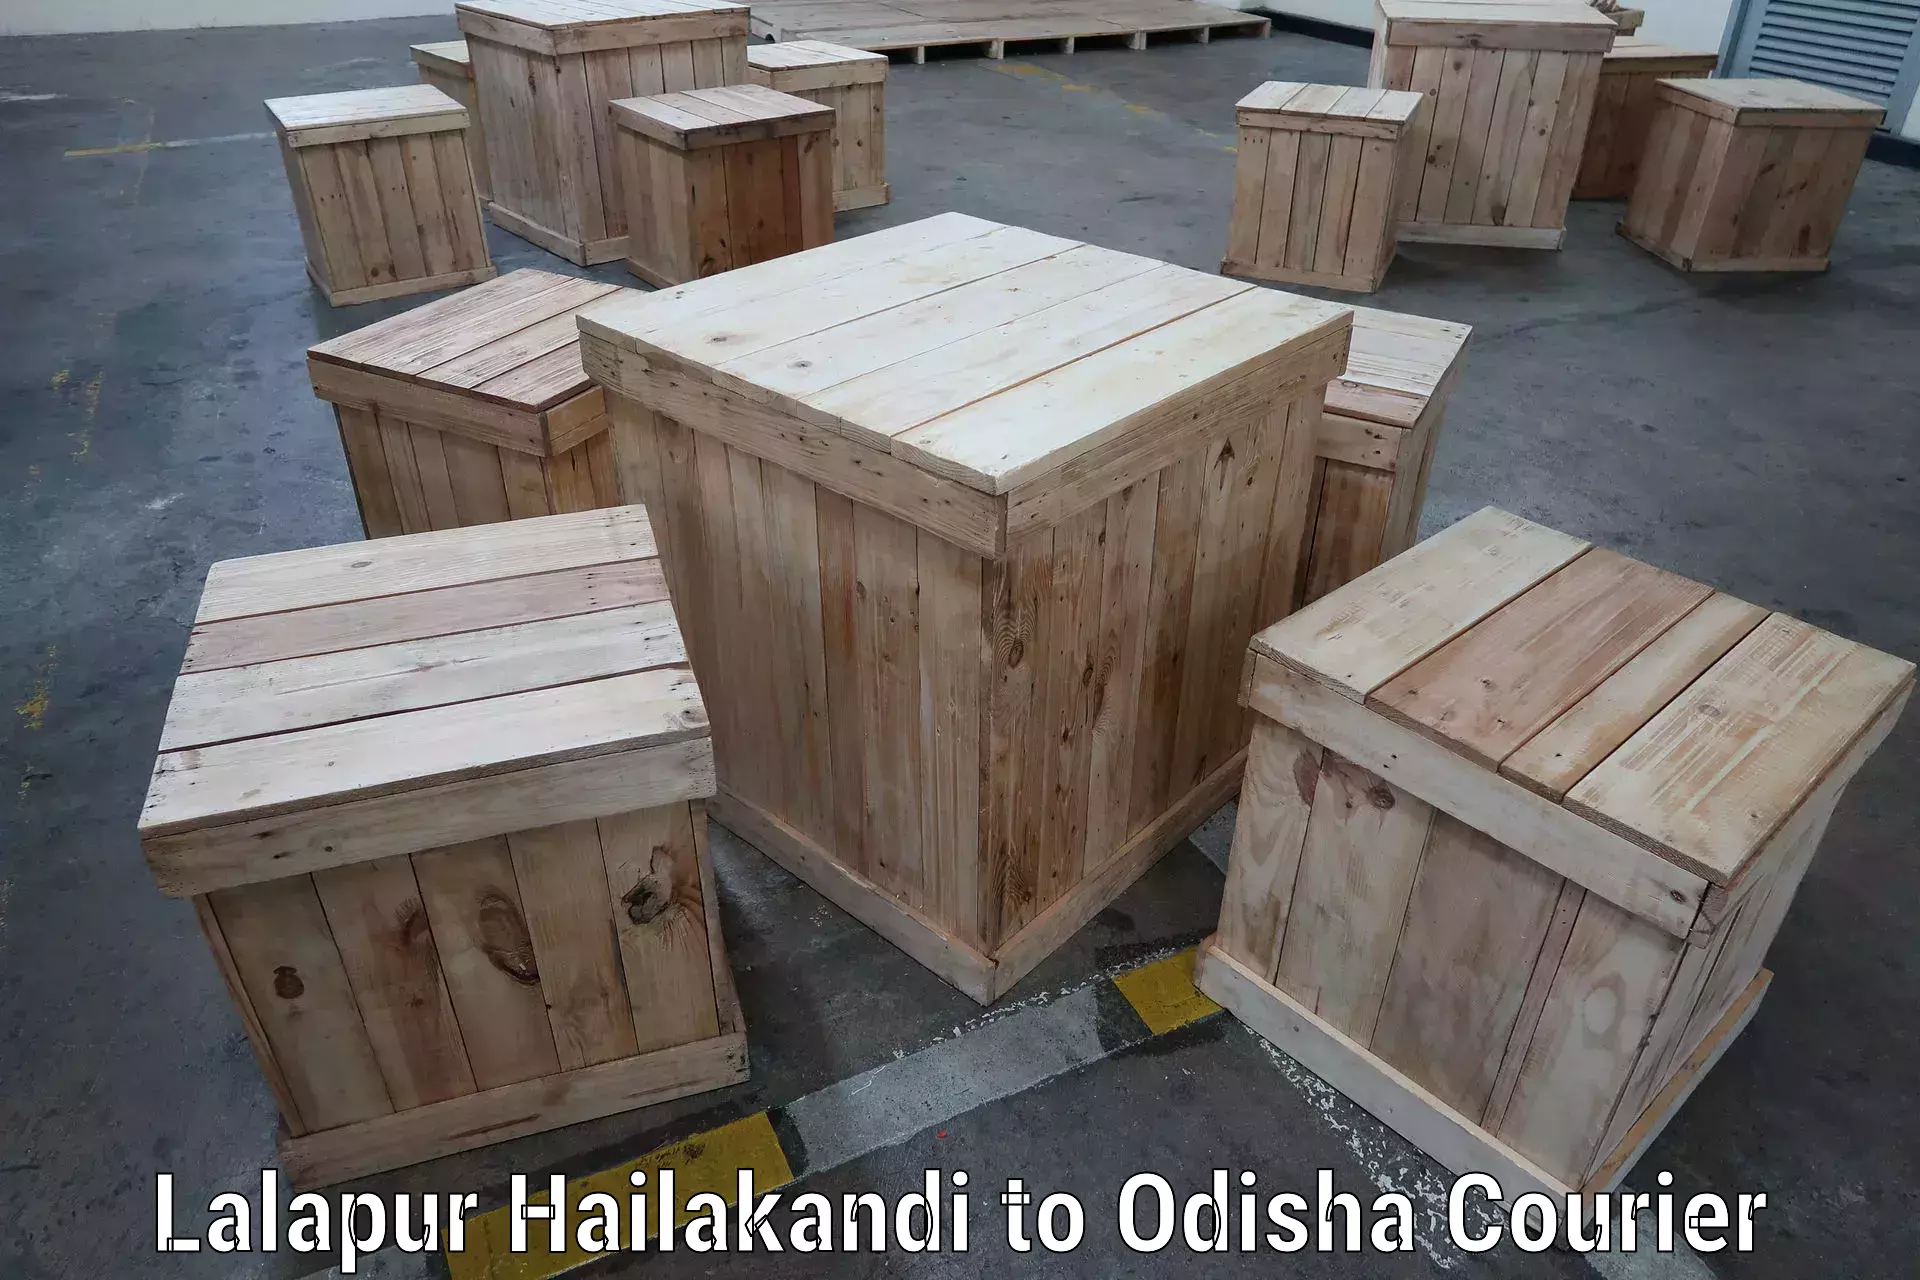 Door-to-door freight service Lalapur Hailakandi to Kandhamal